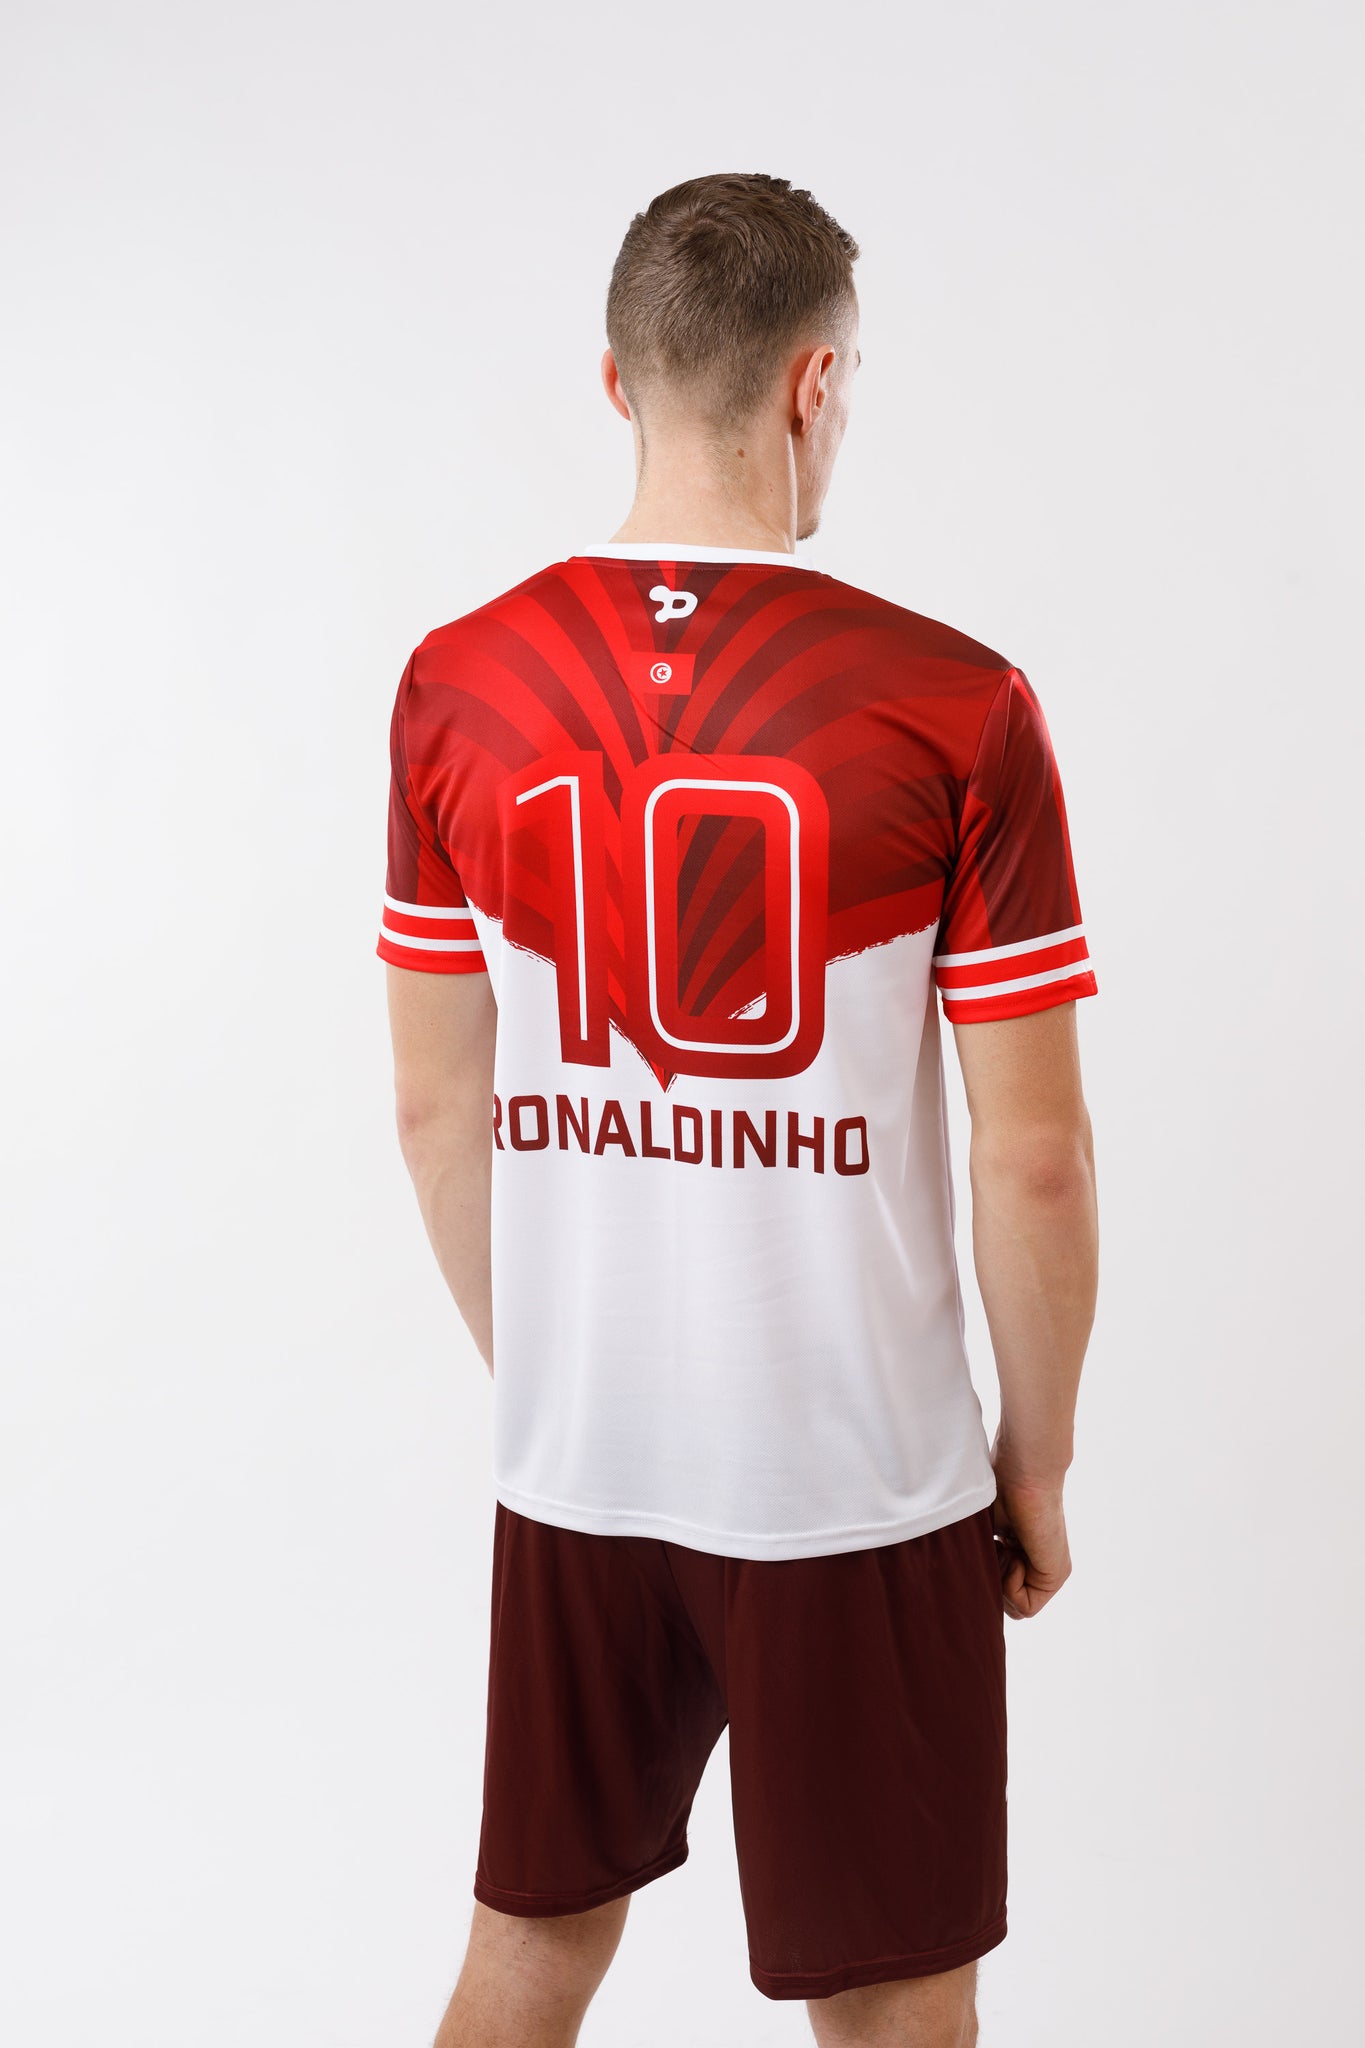 Ronaldinho Tunisia Jersey/Camisa Replica